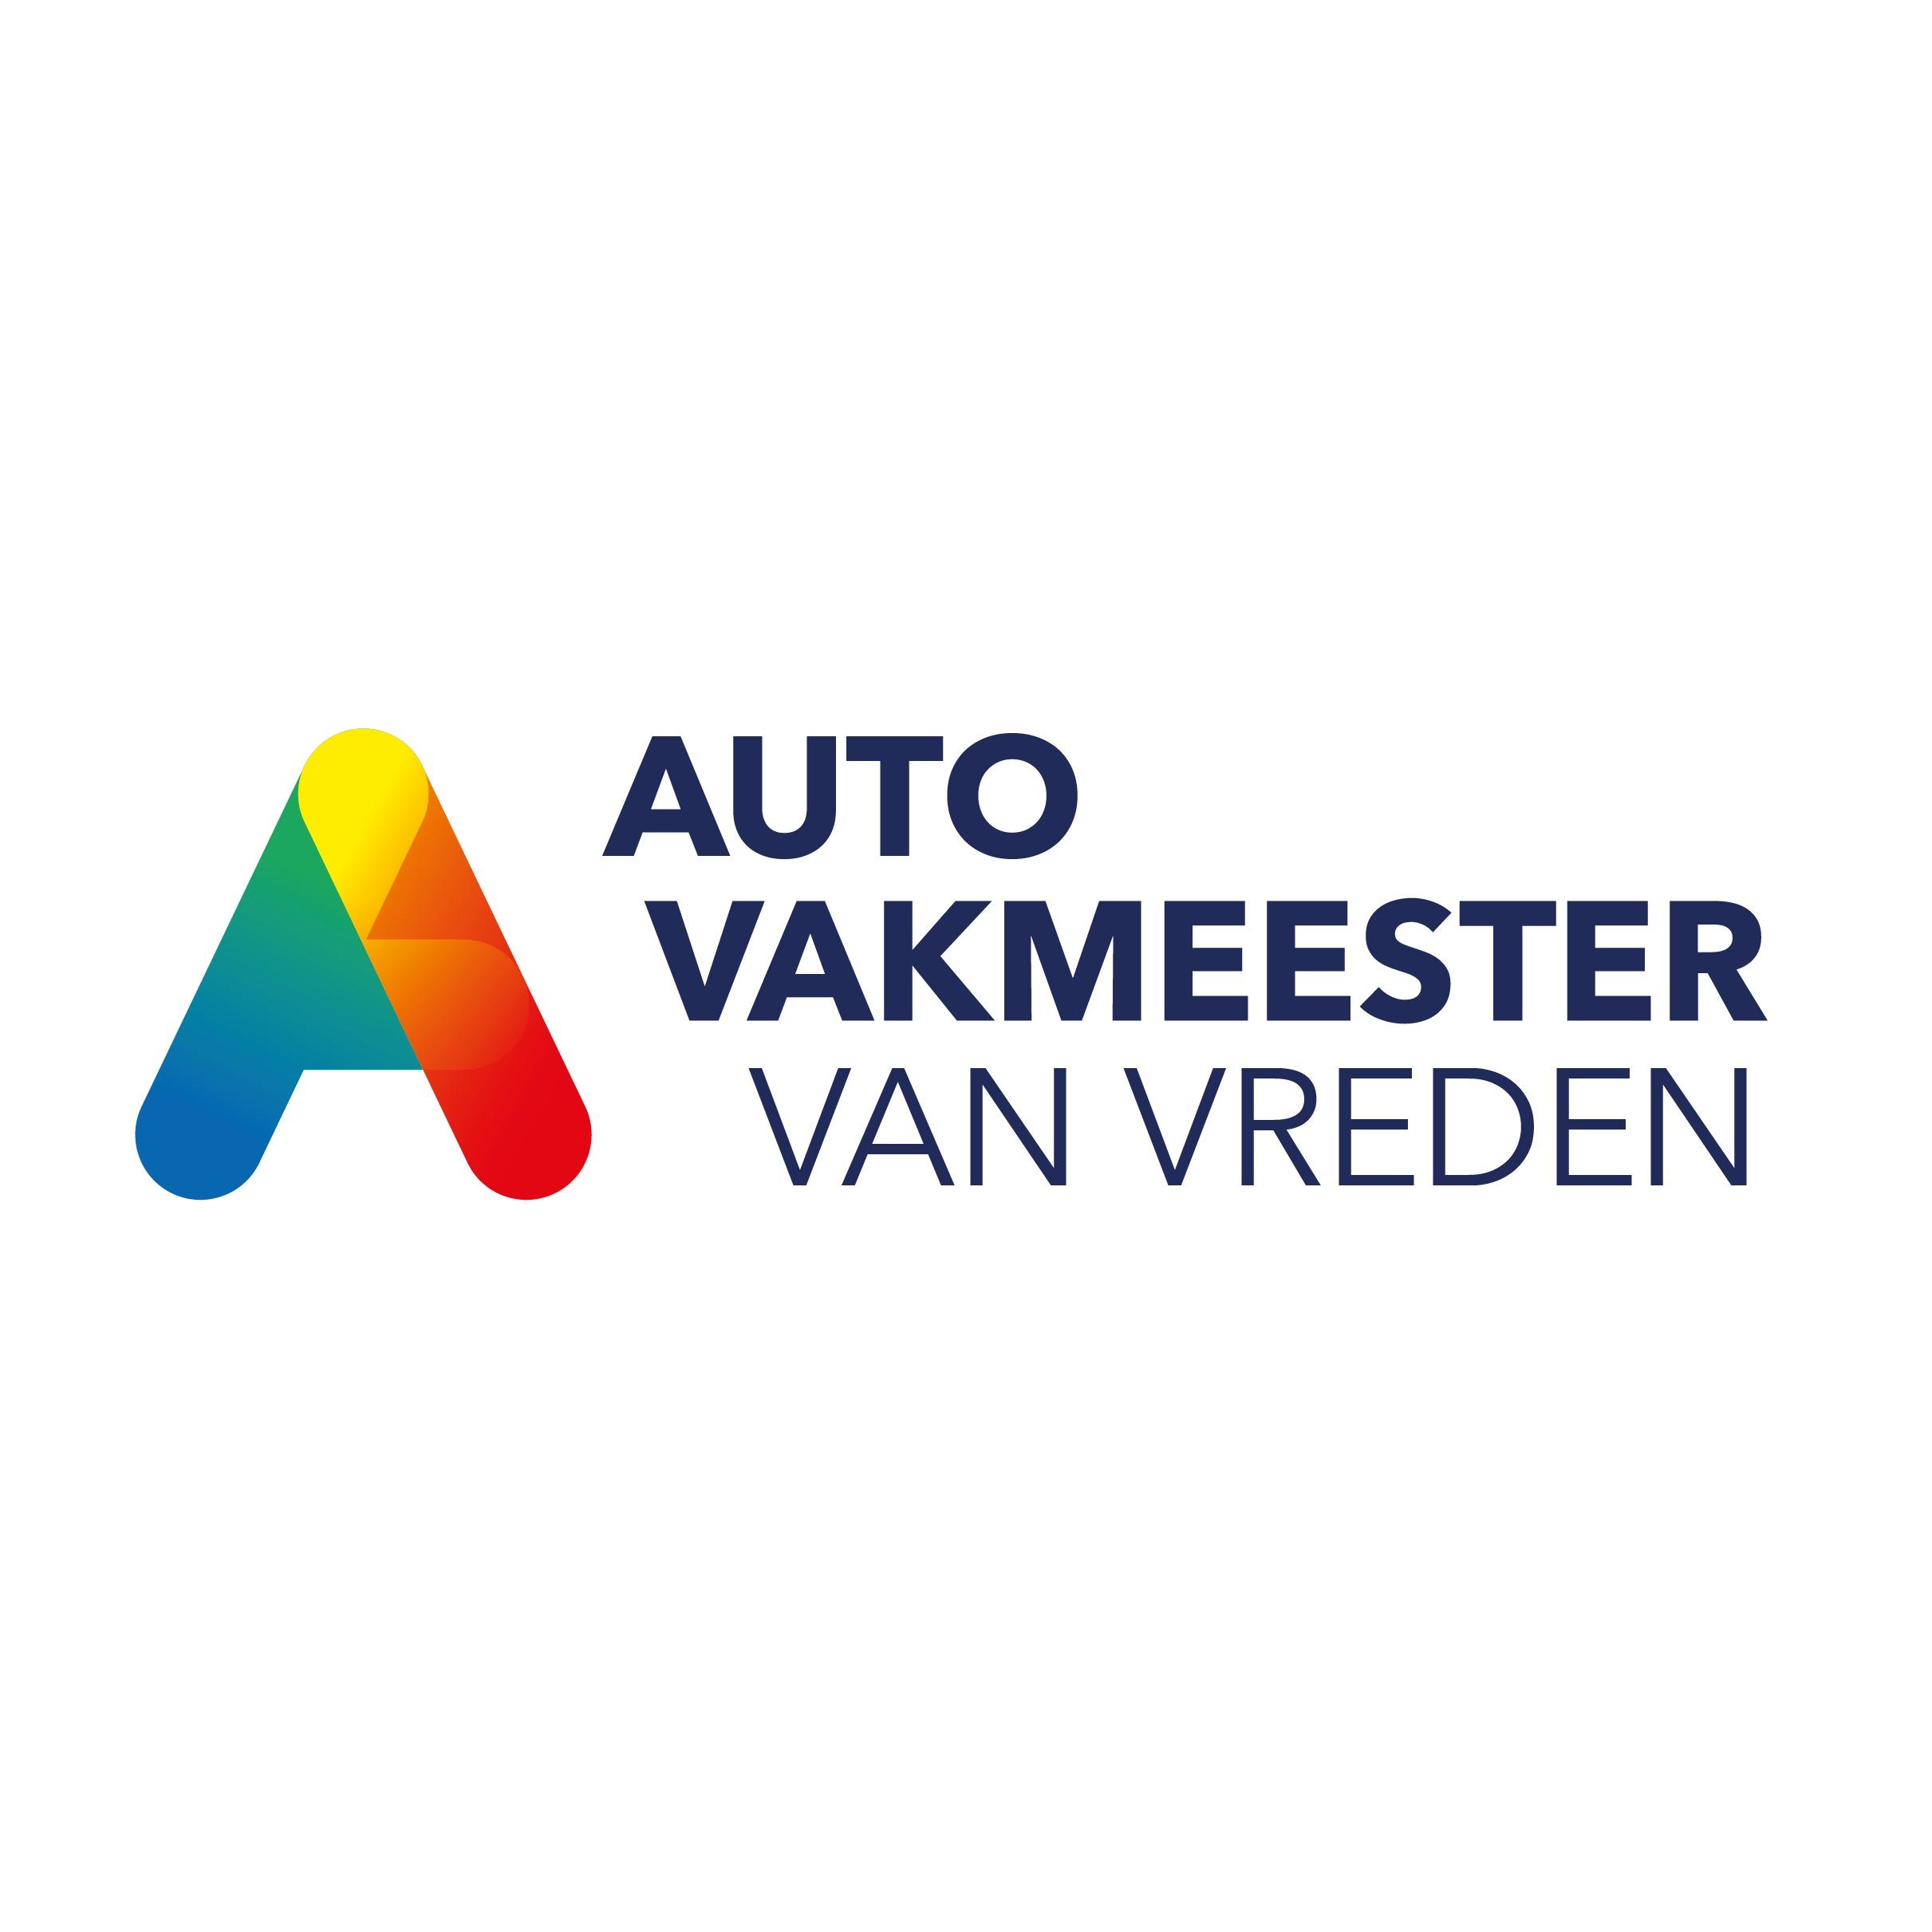 Autovakmeester van Vreden Logo